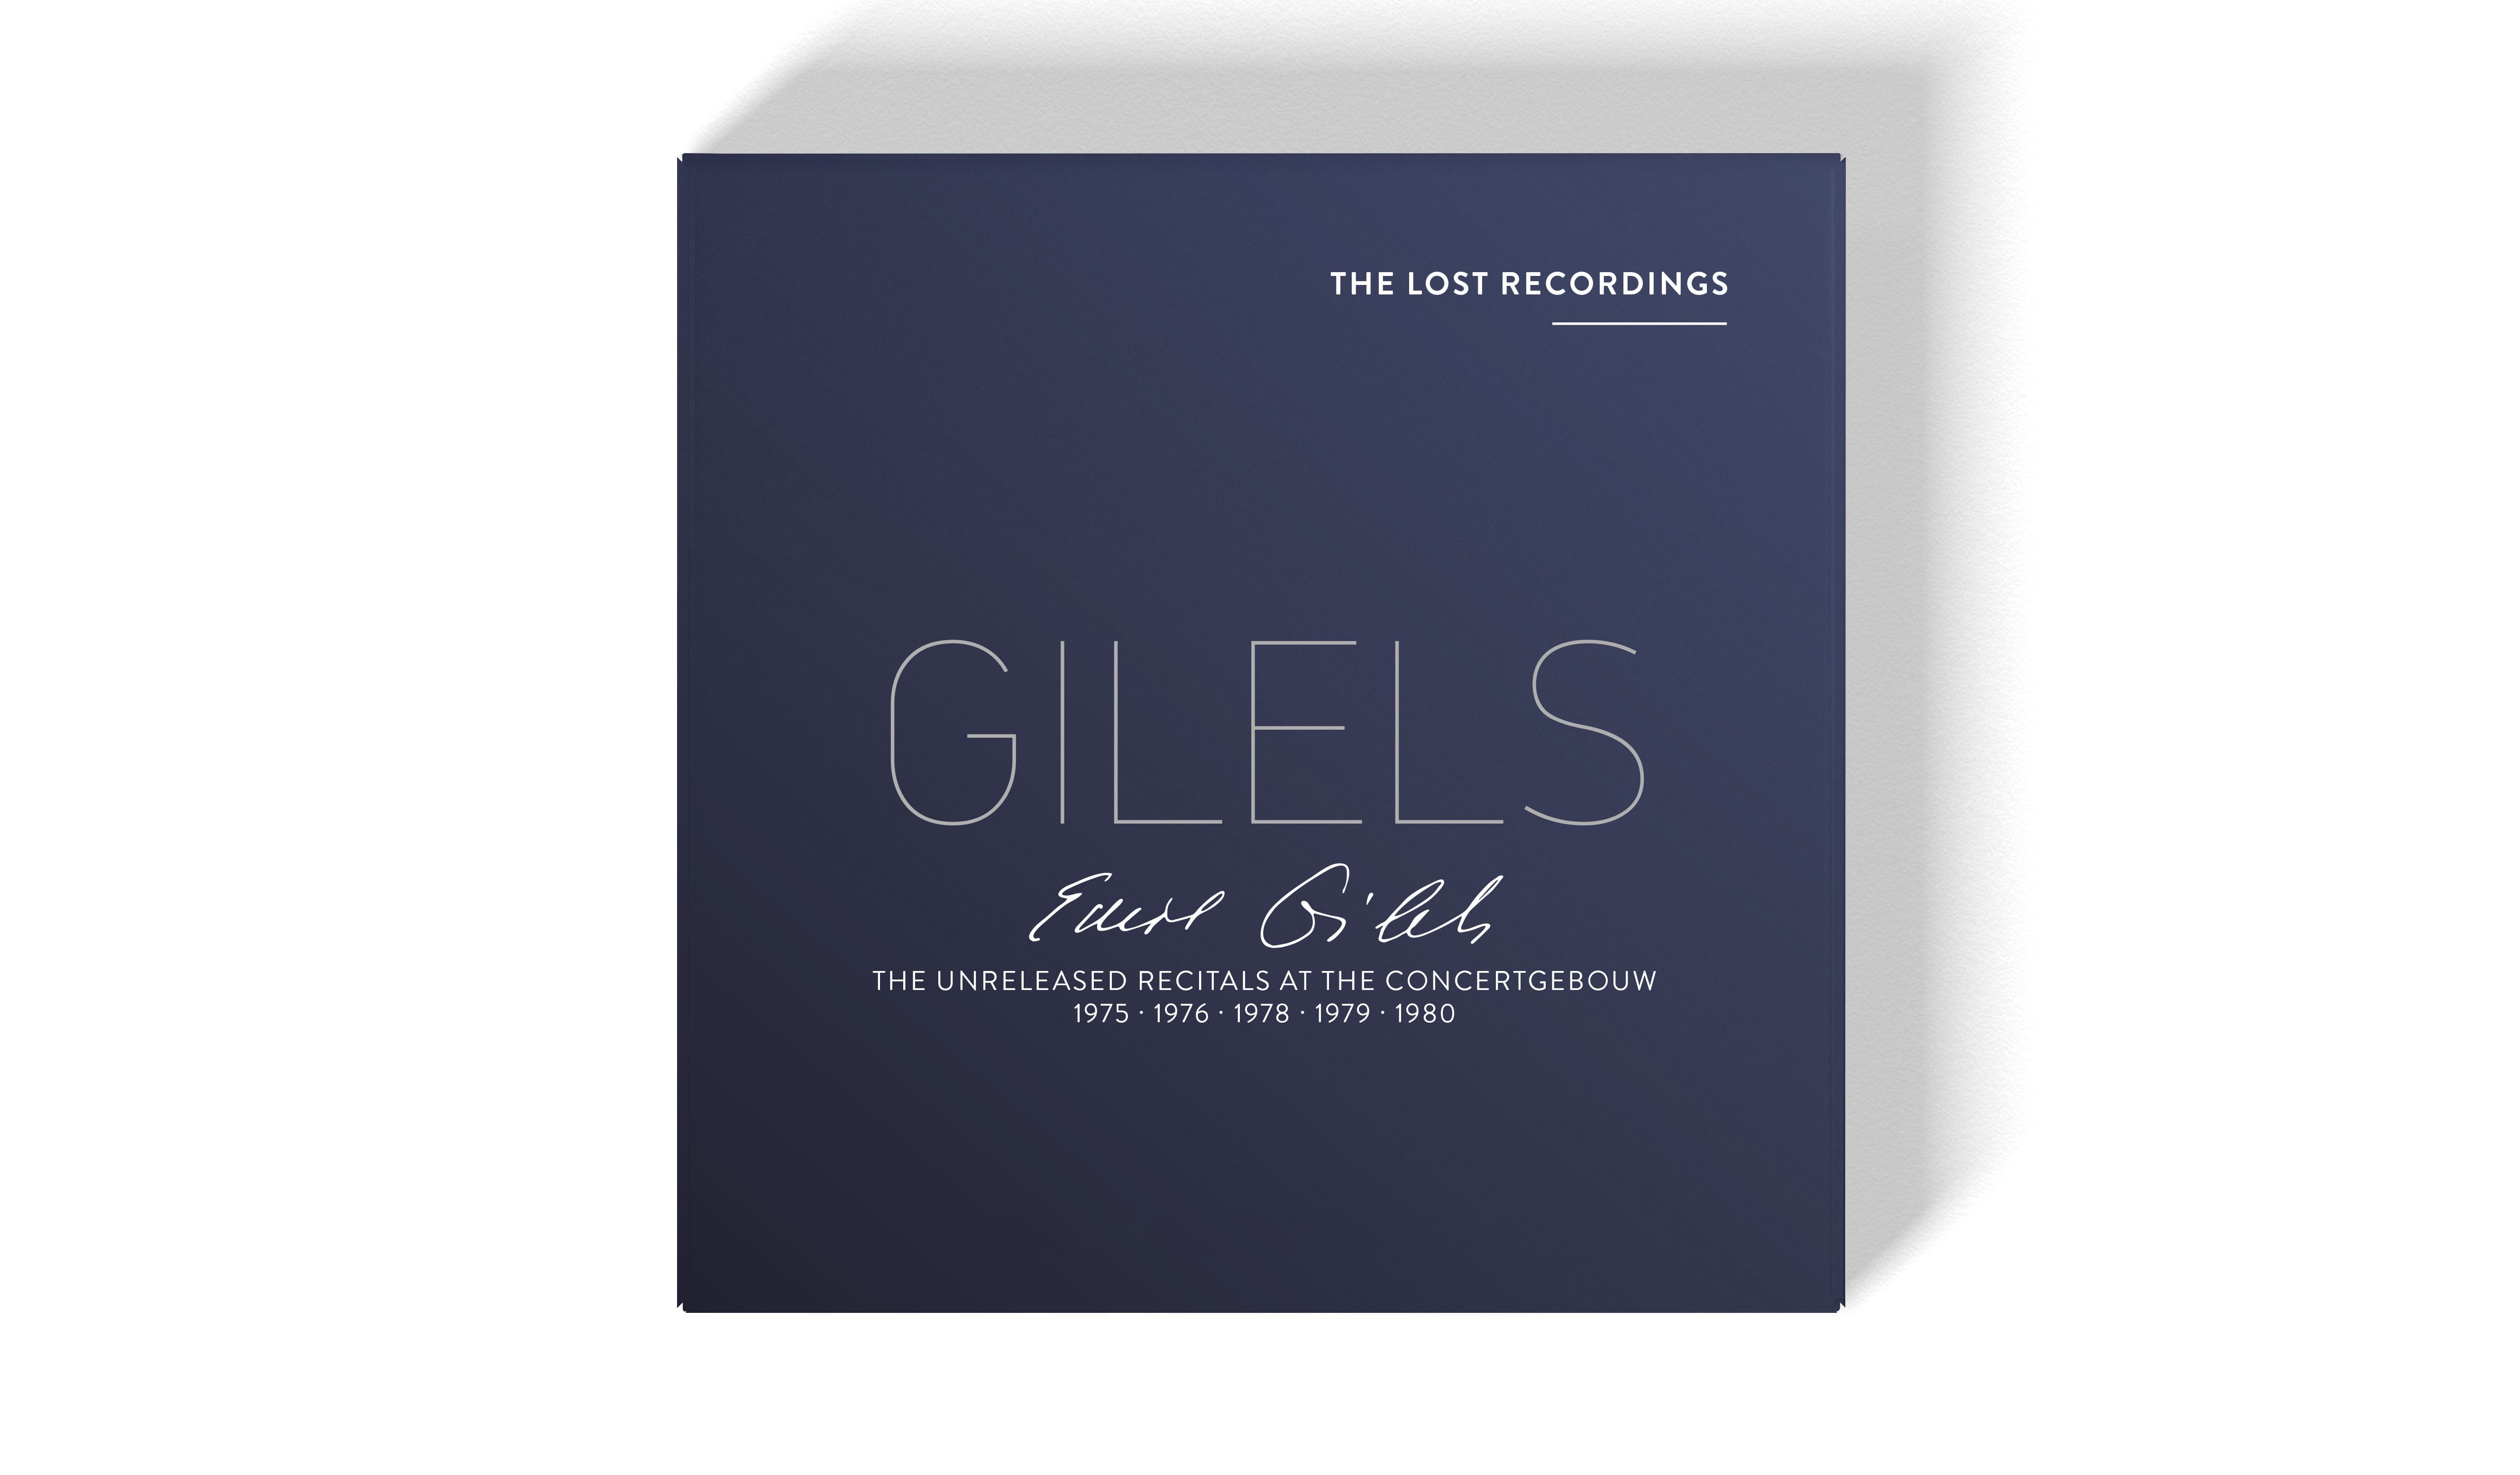 Emil Gilels - The Unreleased recitals at the Concertgebouw - 5 CD box set